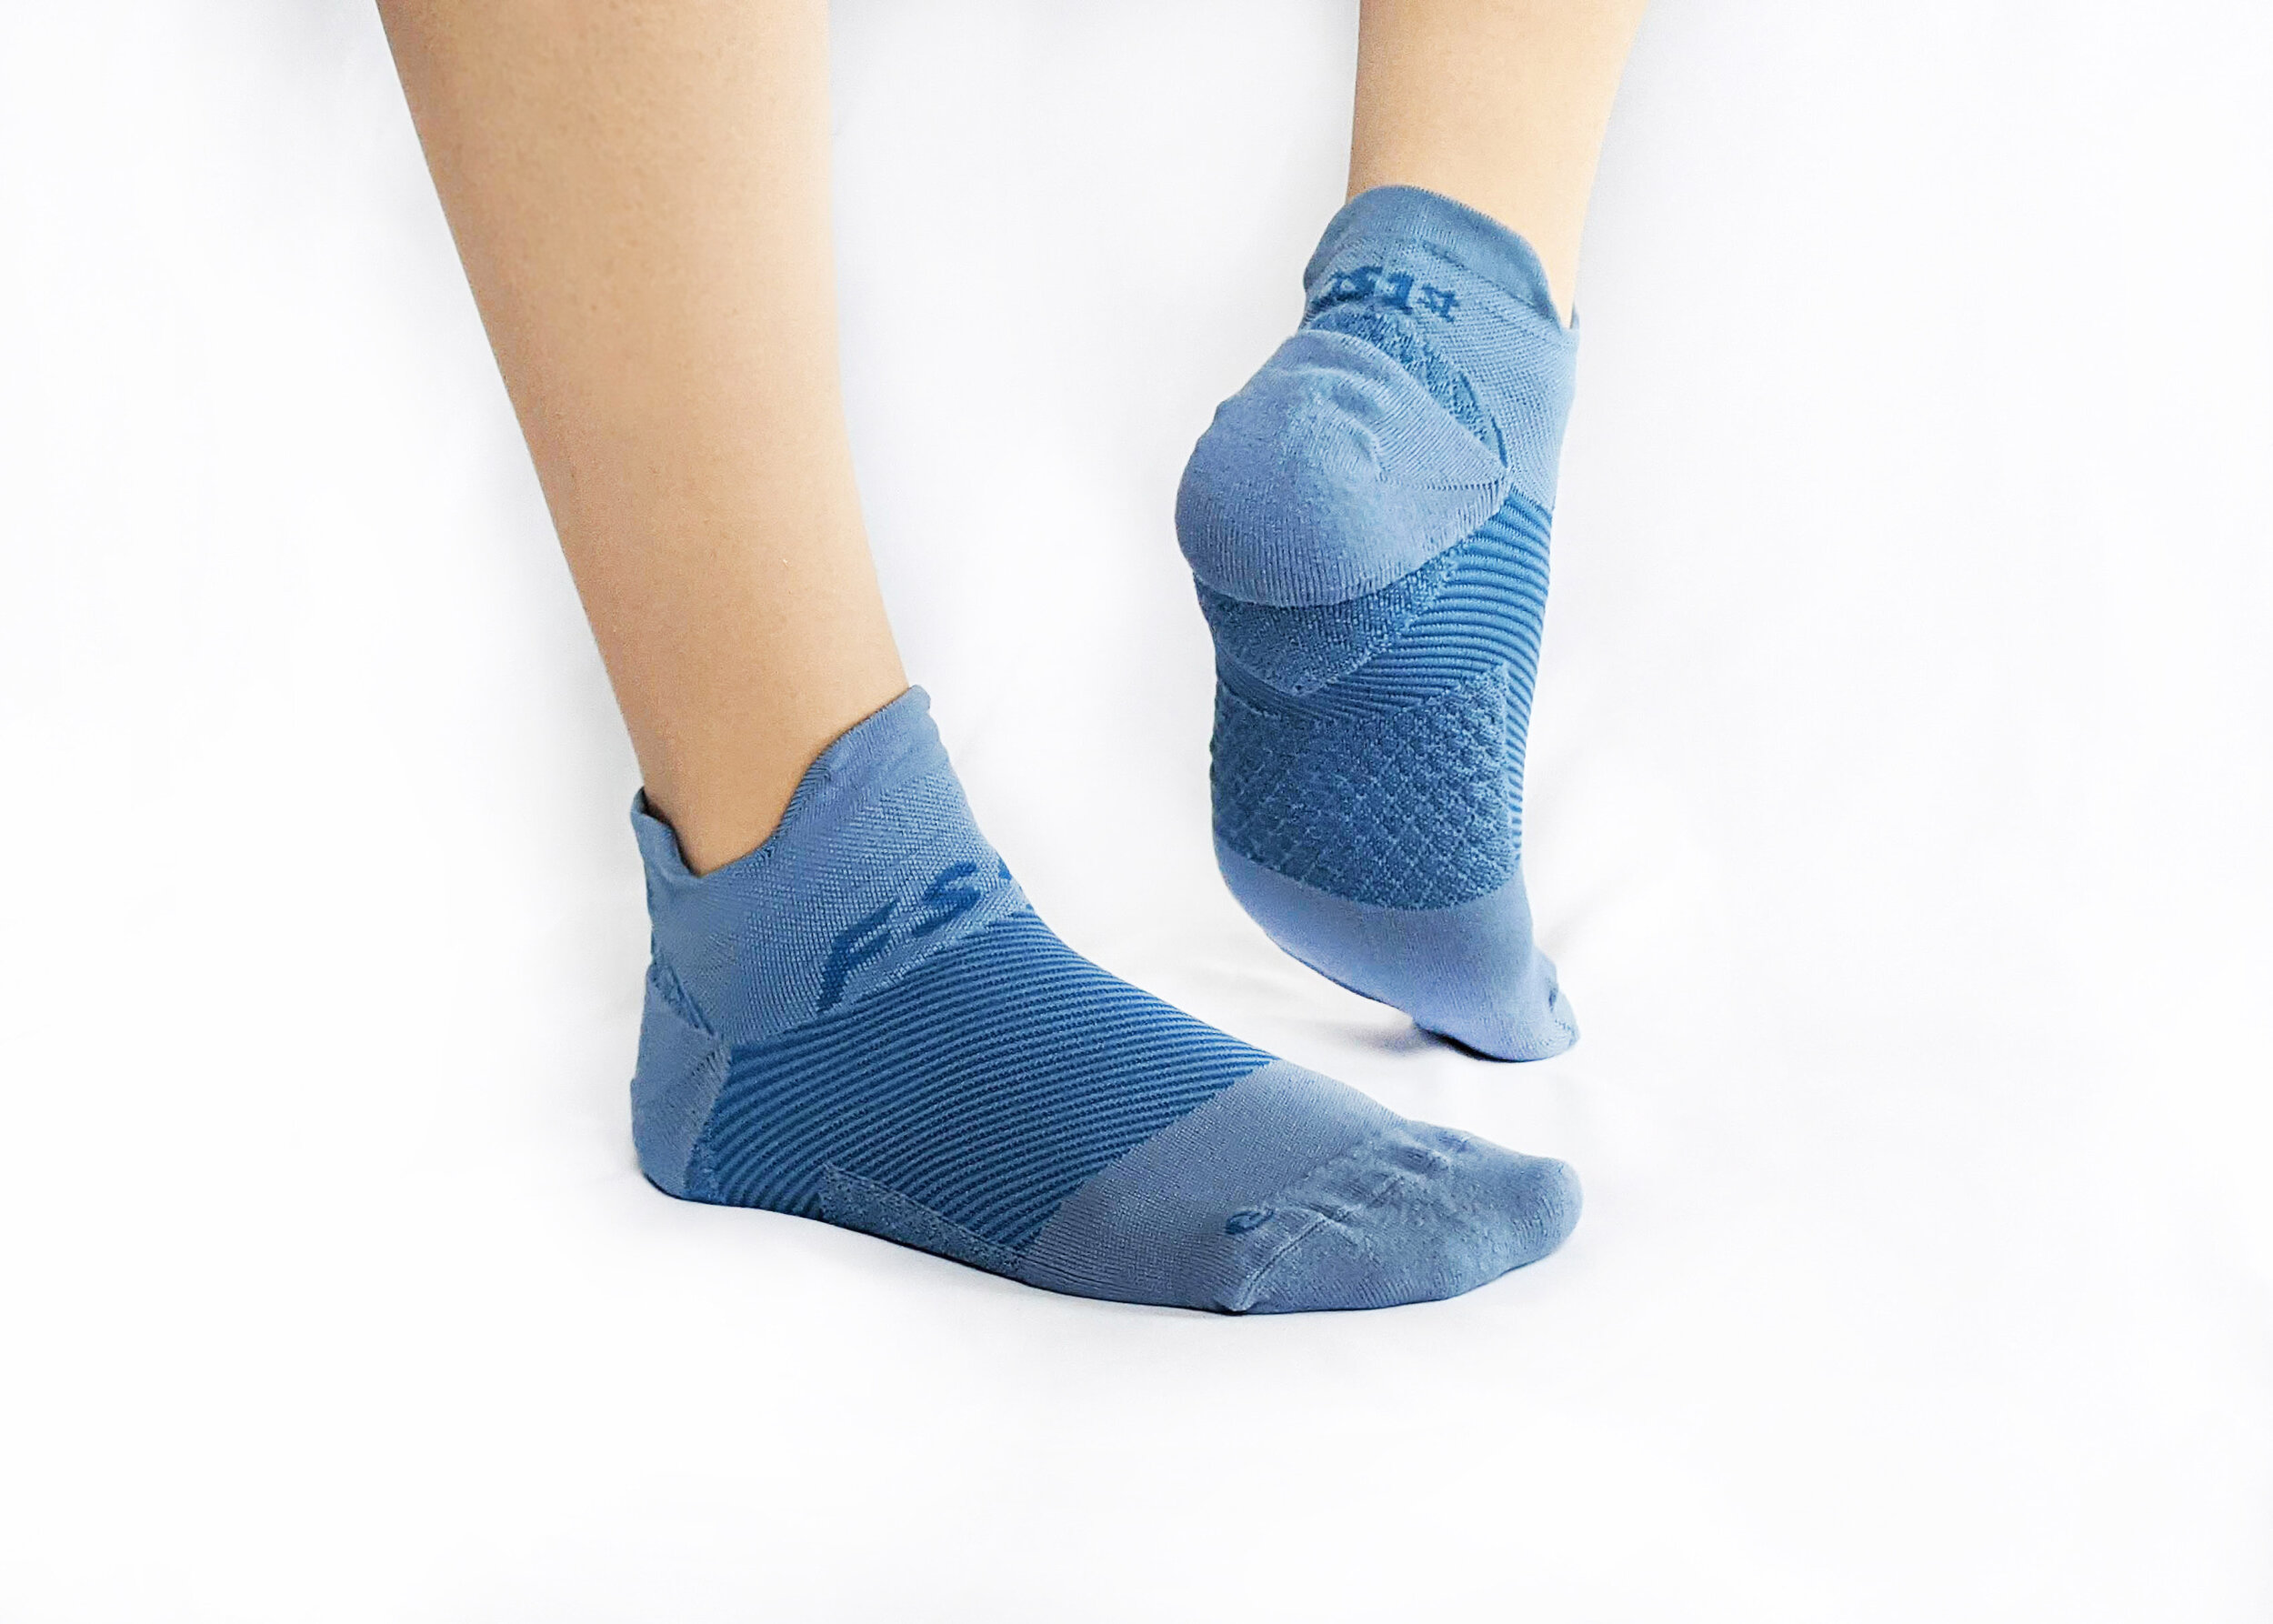 Ladies Outdoor Funky Sneaker Socks Retro Running Trainer Novelty UK Size 4-7 lot 